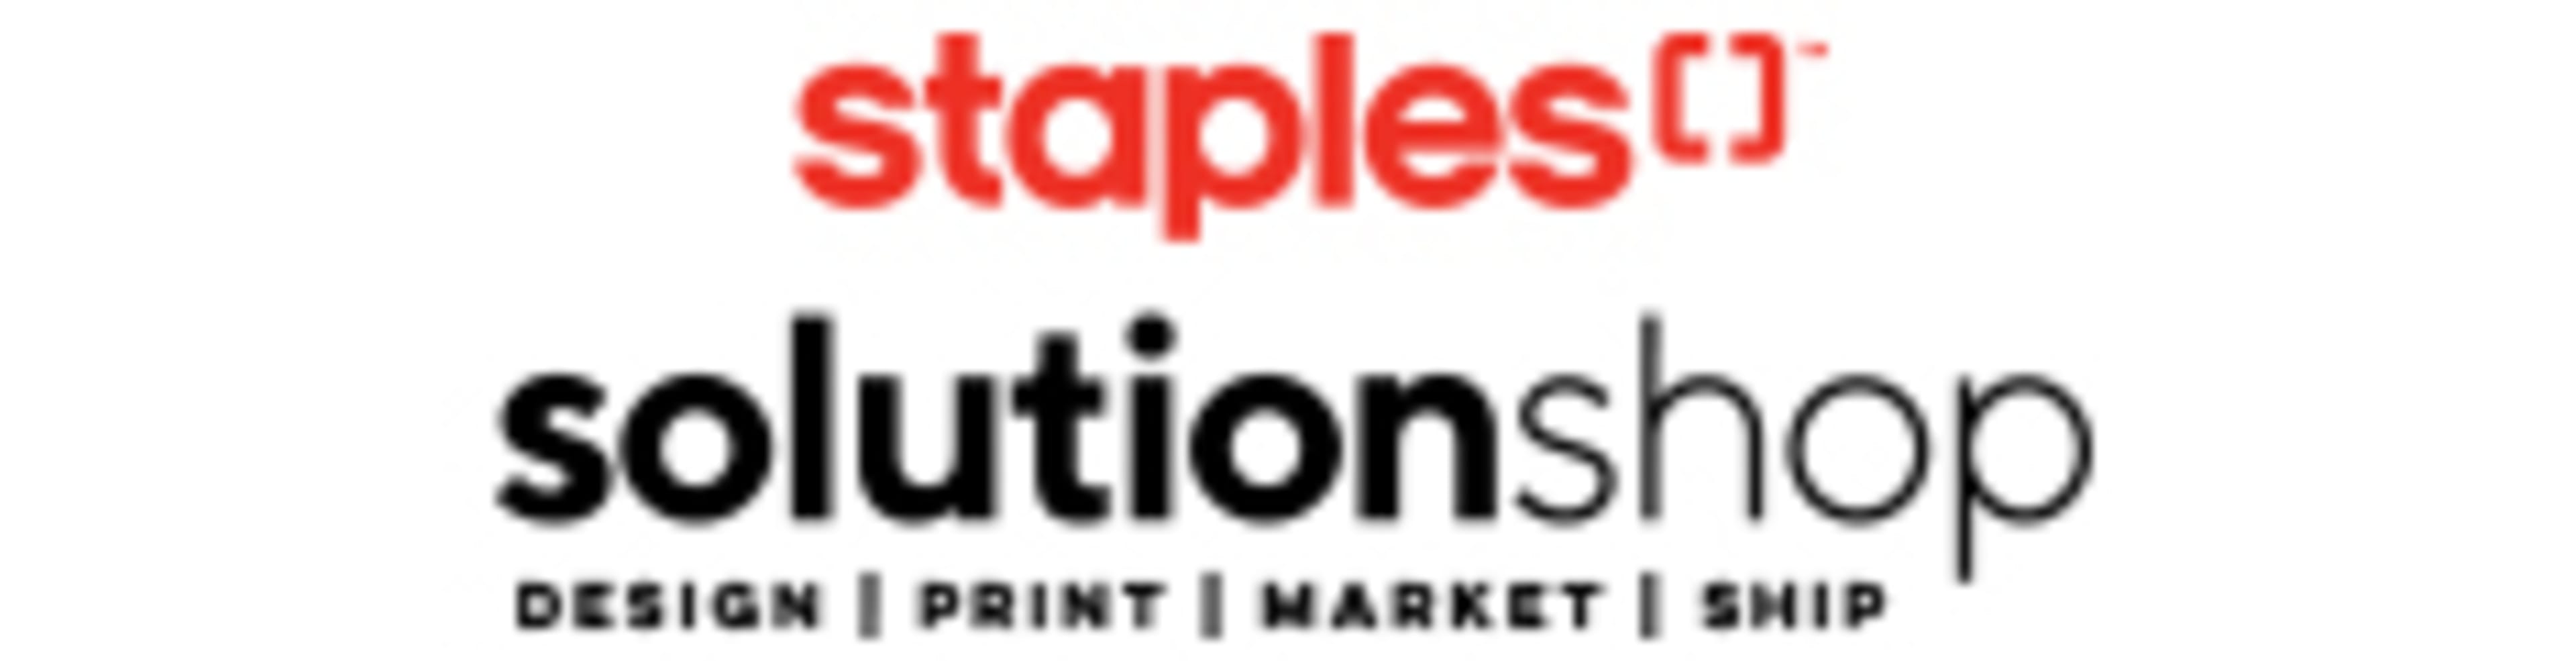 Staples SolutionShop Canada Code